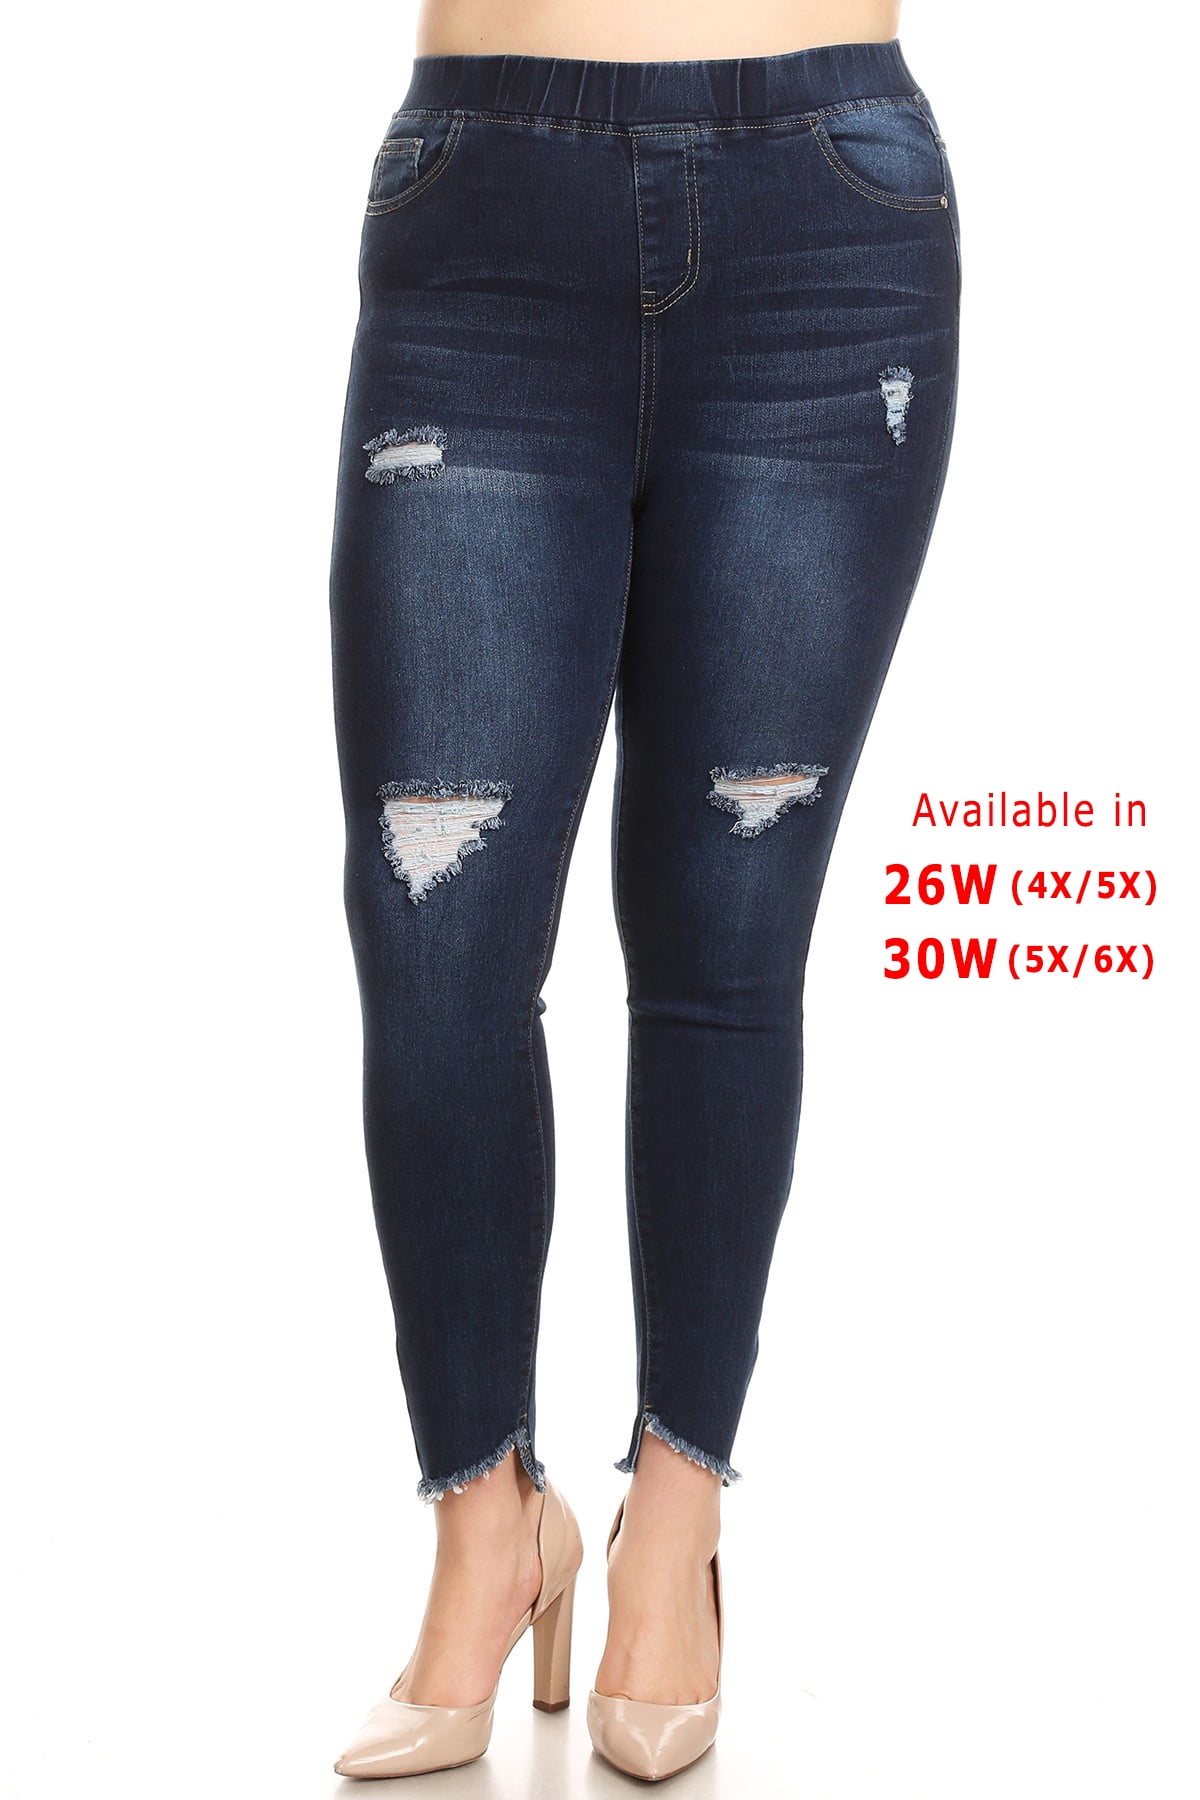 kasseapparat Ungkarl Tradition Extended plus size denim jeggings jeans waist-hugging fit 4X to 5X -  Walmart.com